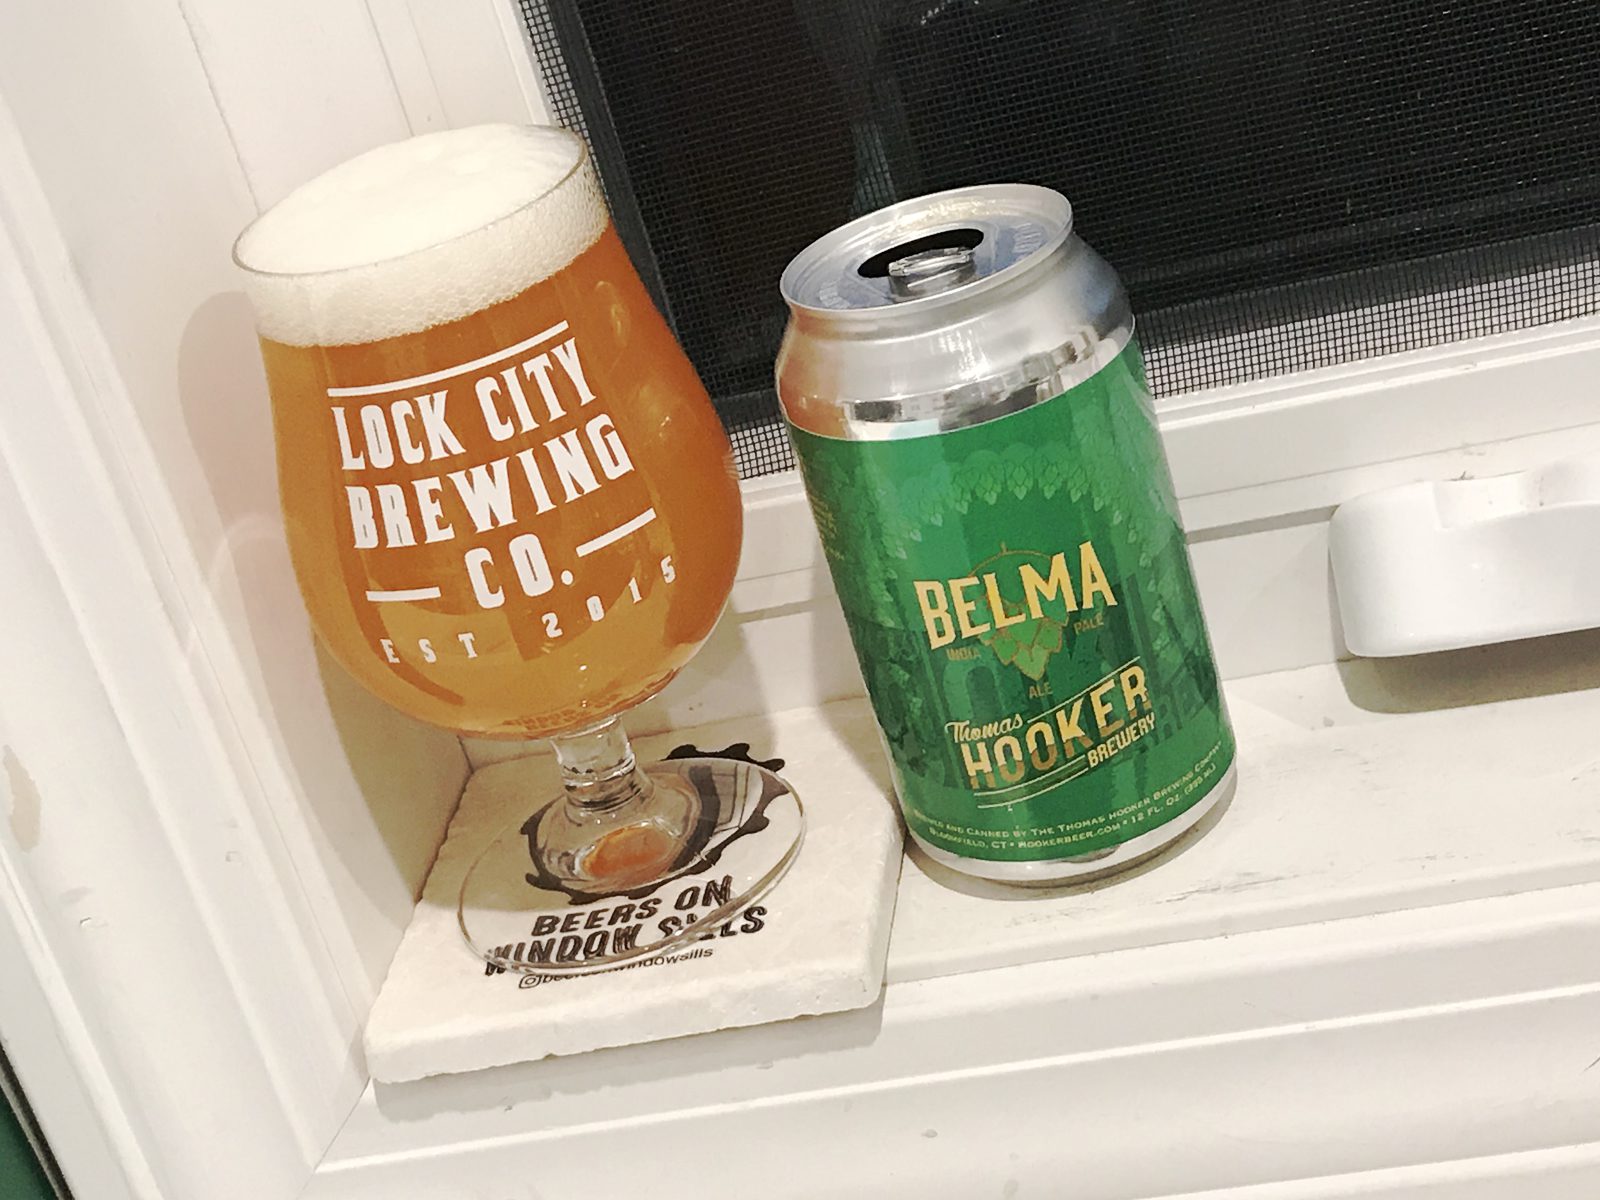 Thomas Hooker Brewery: Belma IPA